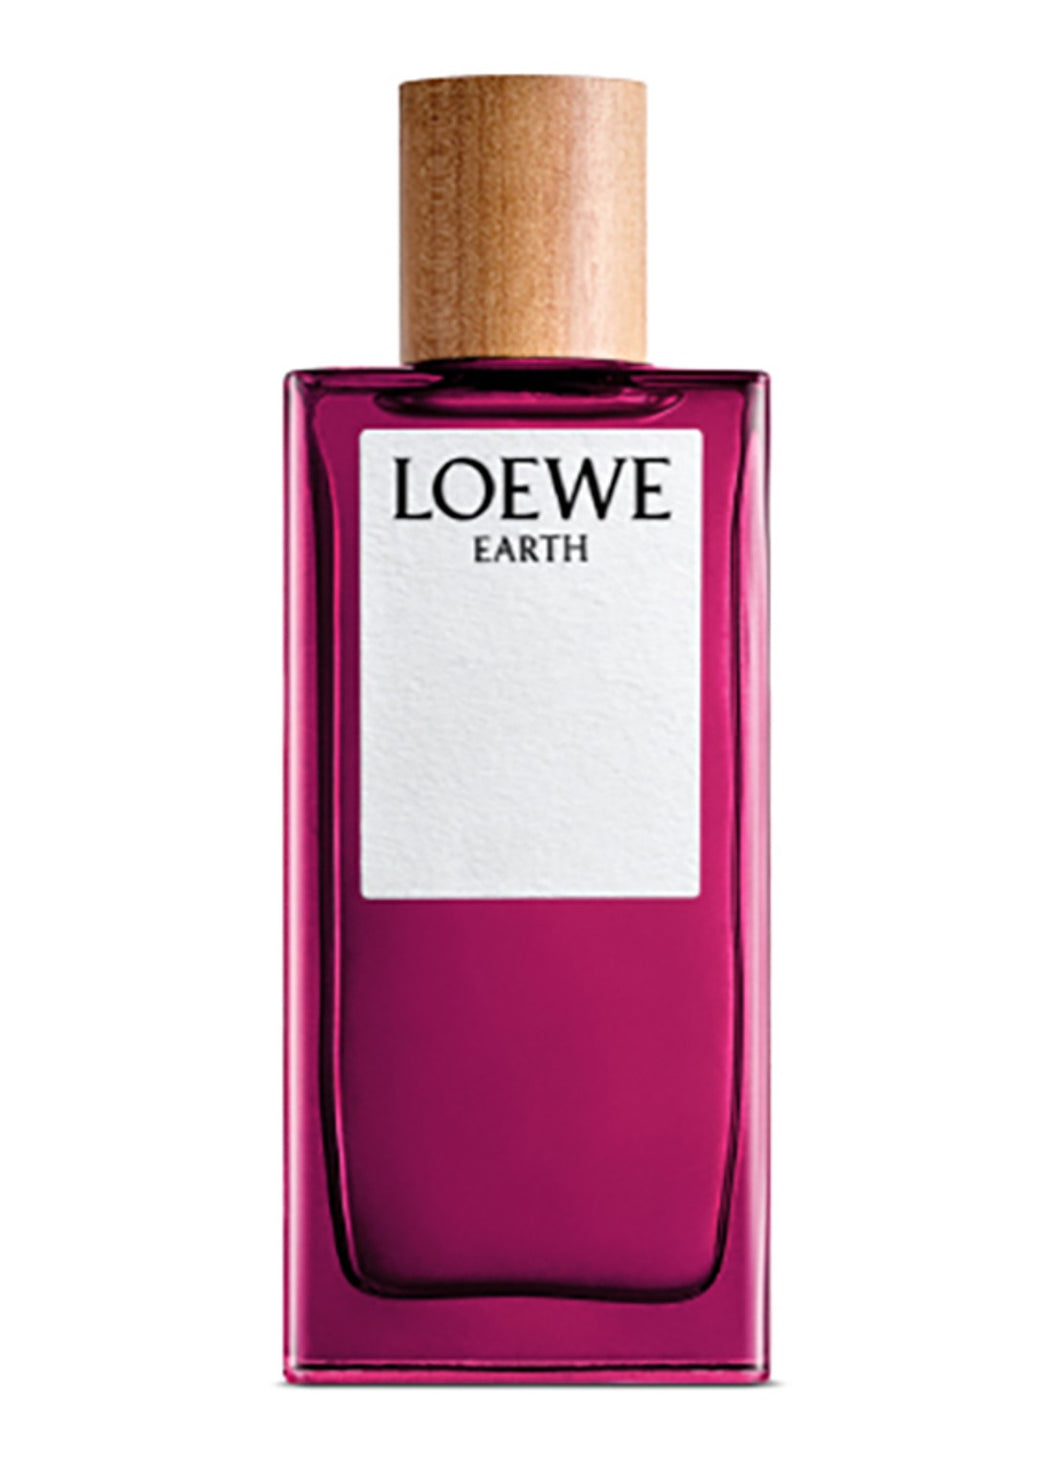 LOEWE - Earth